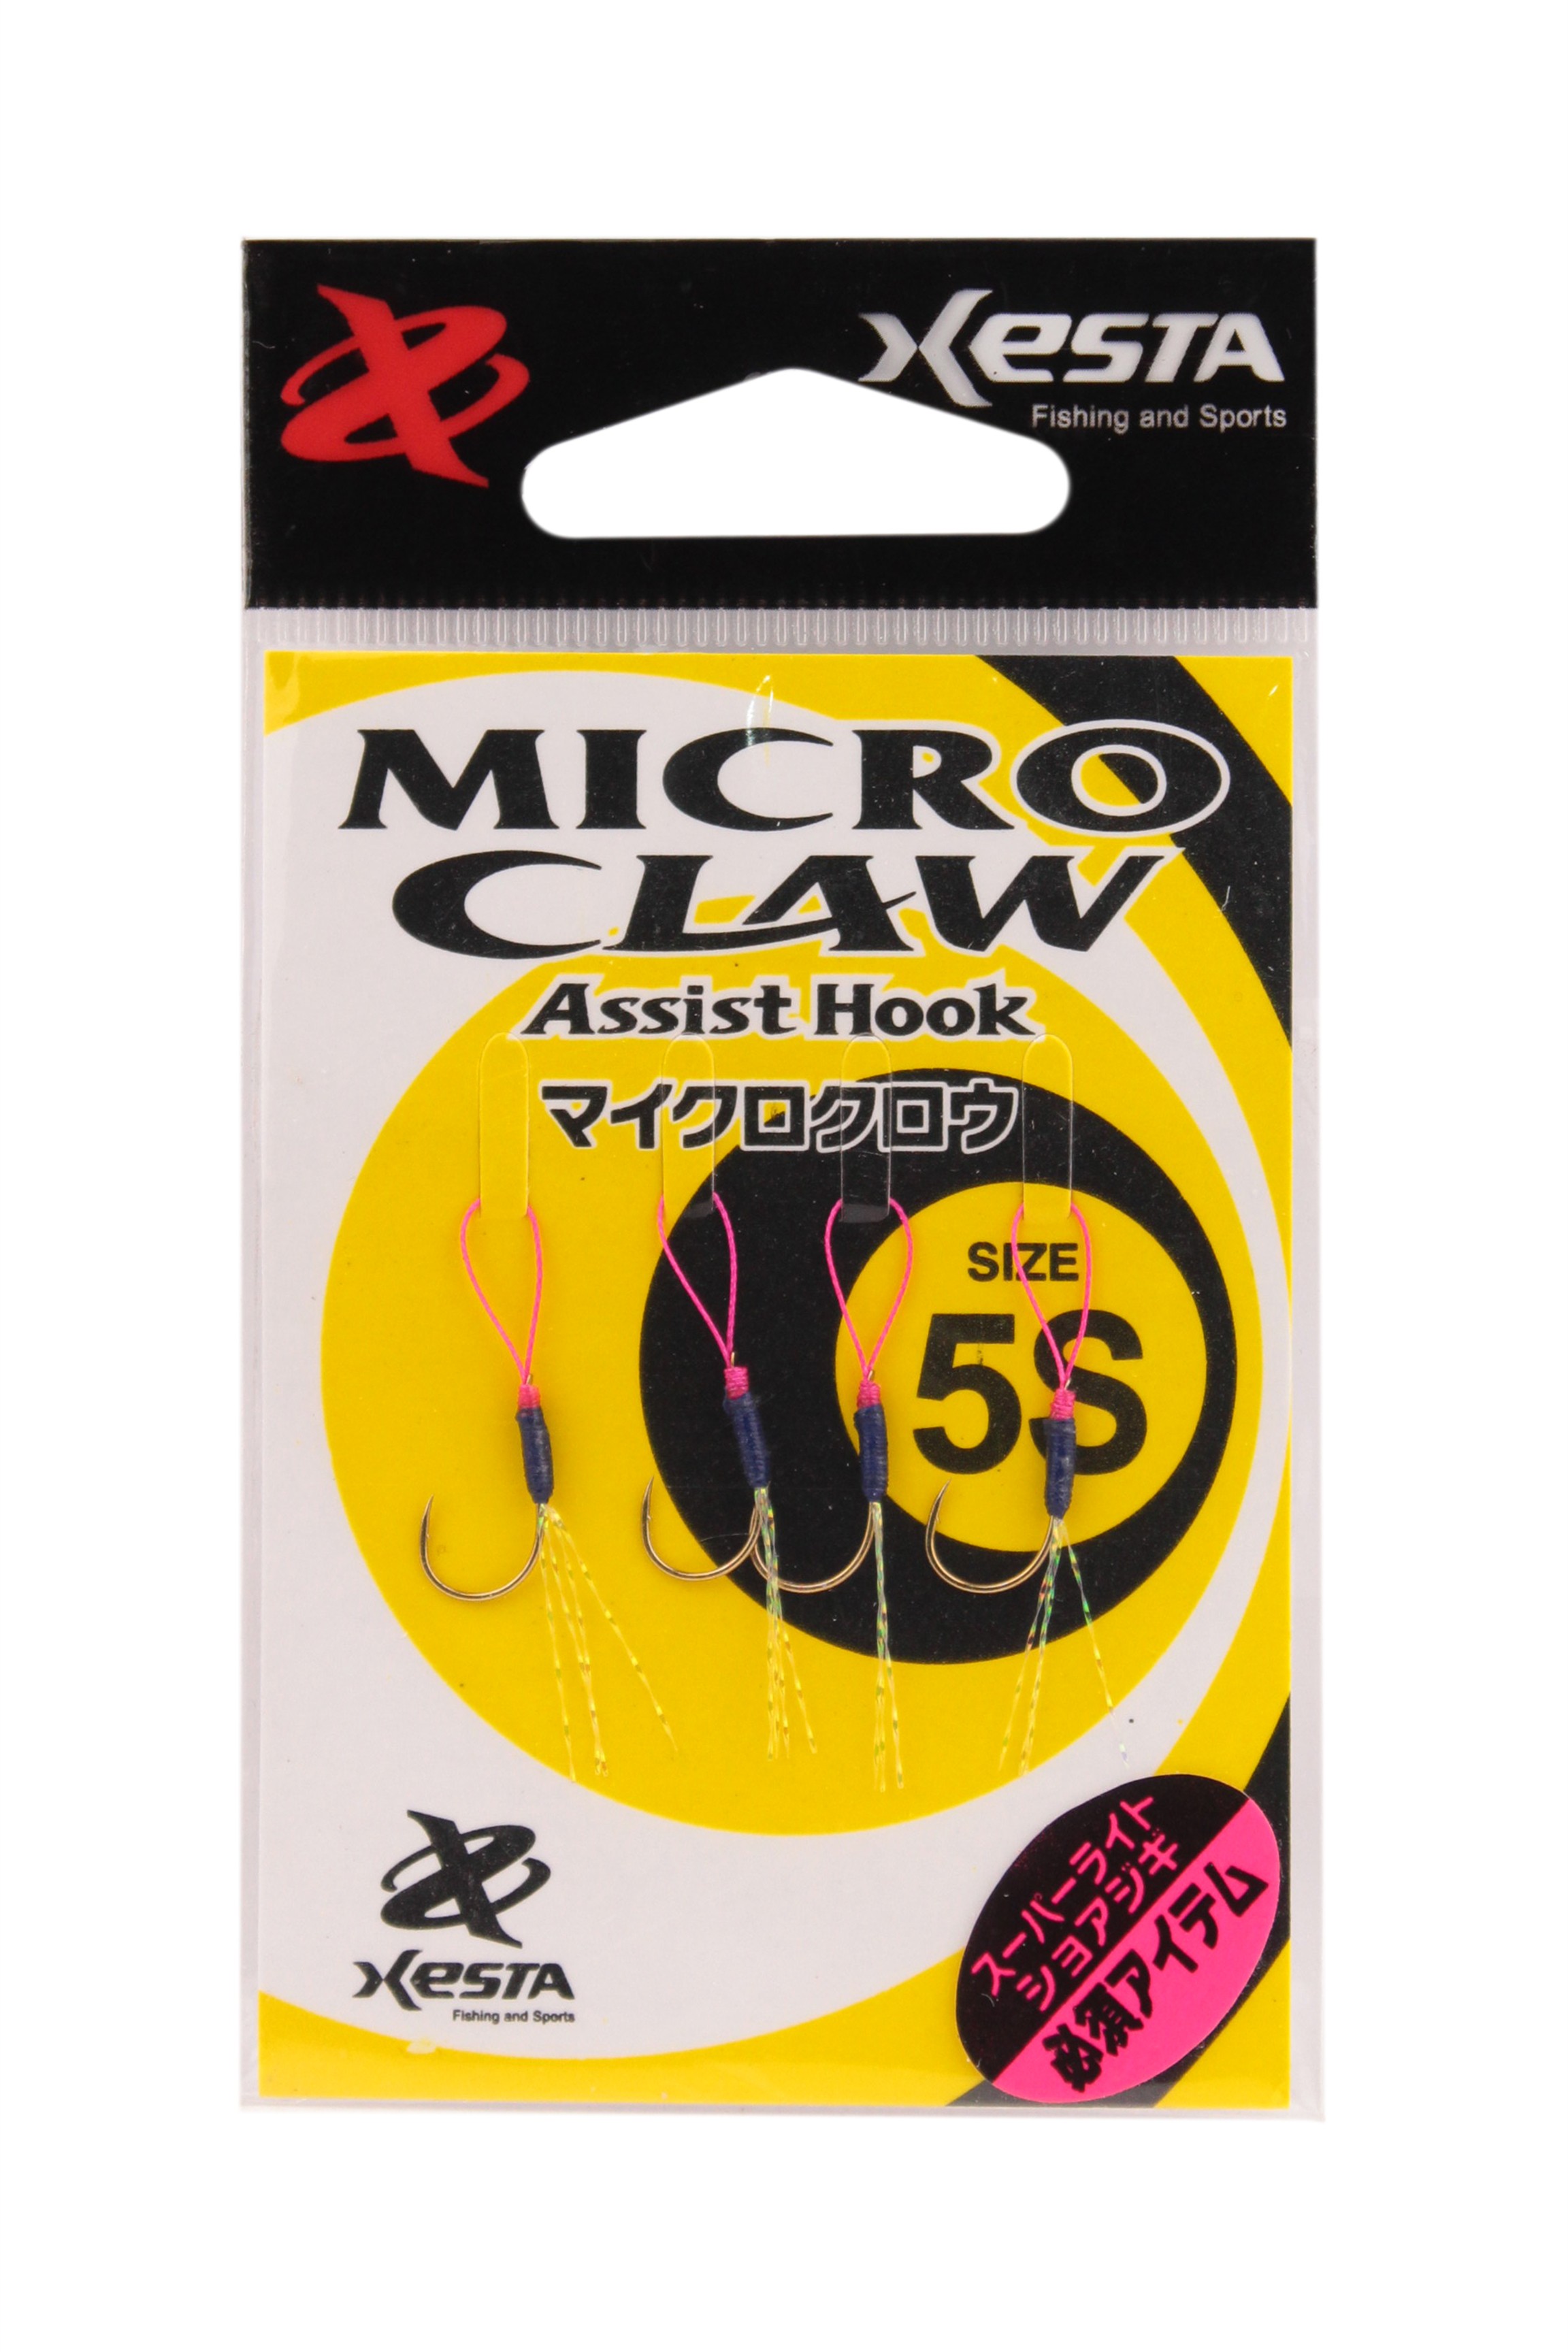 Крючки Xesta Micro claw single assist 5s - фото 1